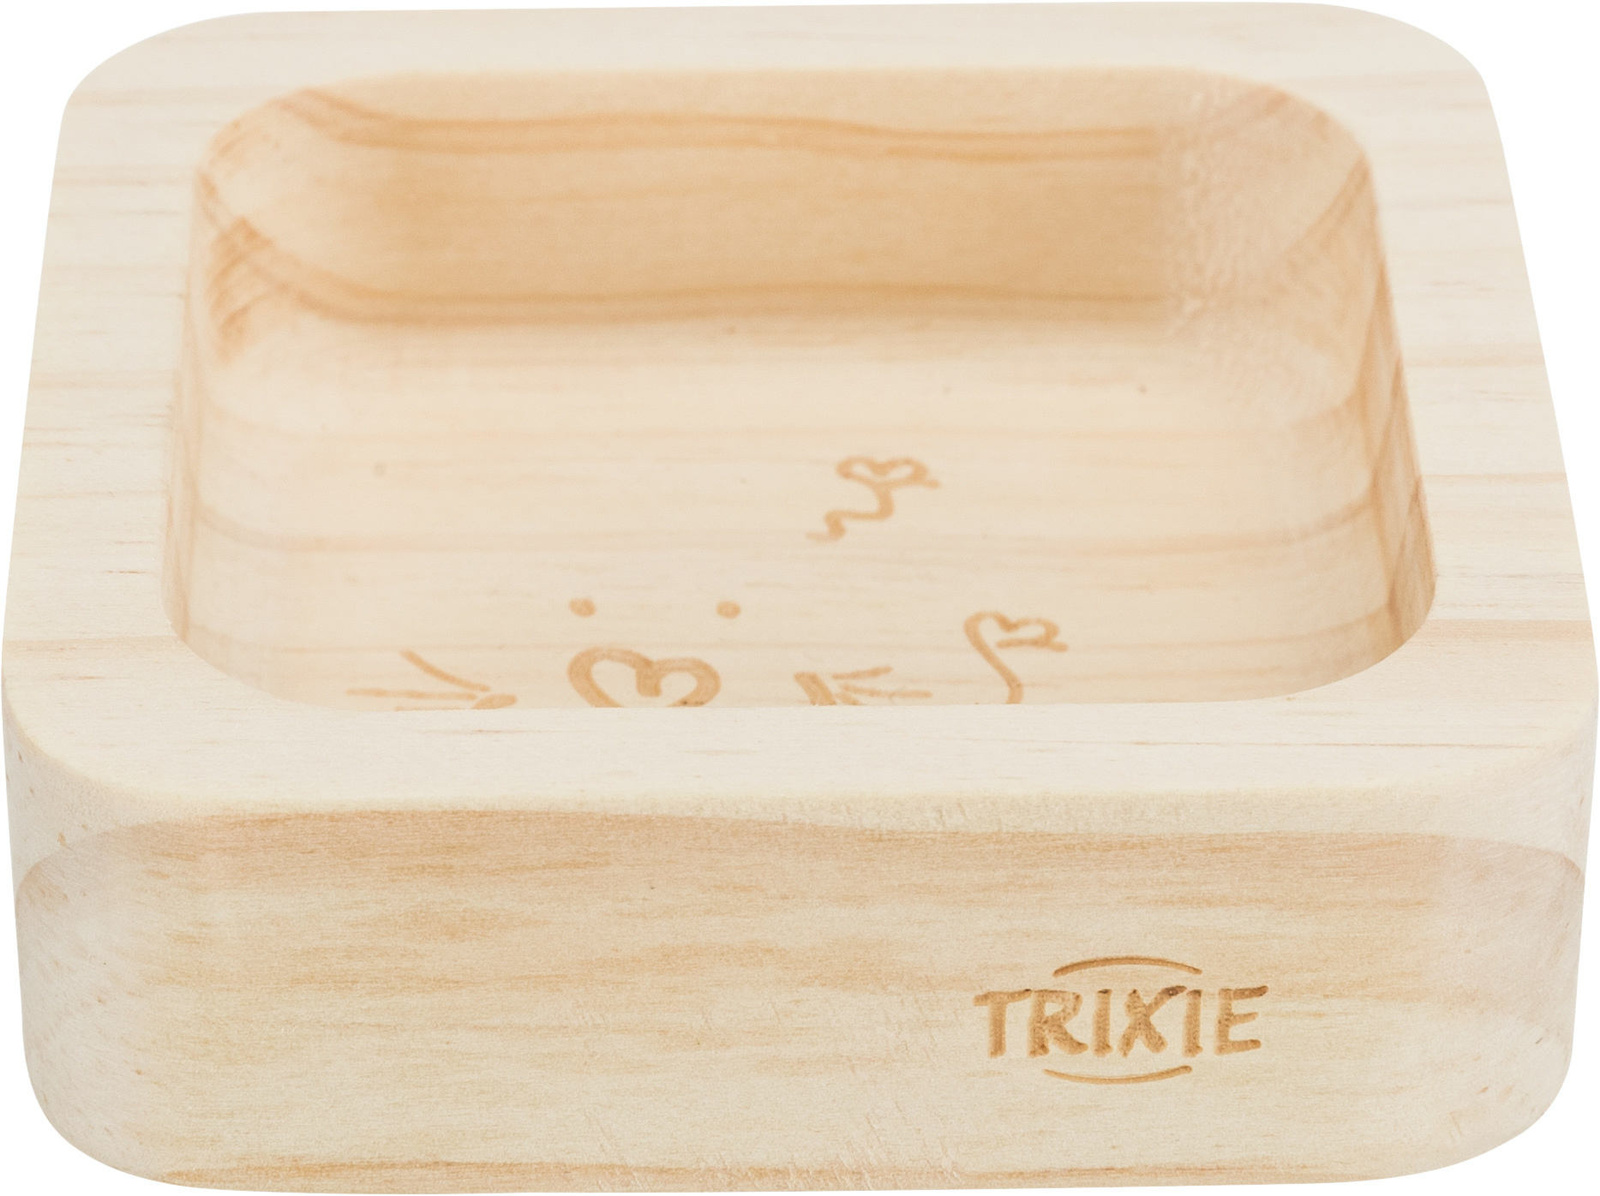 Trixie Trixie миска, дерево (8 см) trixie кусачки 8 см